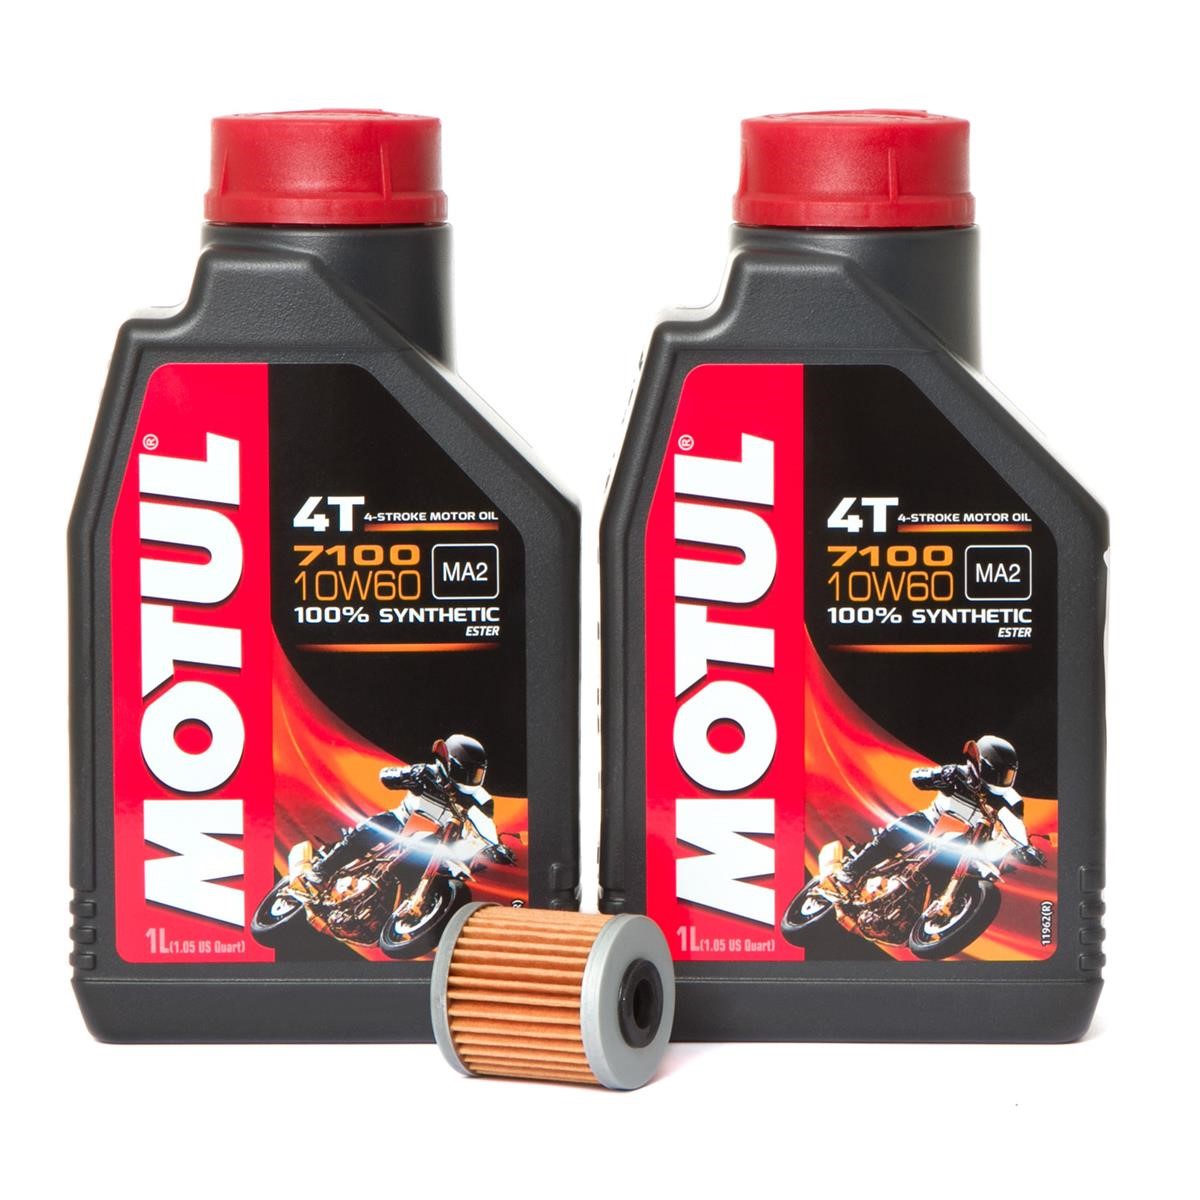 Motul Kit Huile Moteur 10W60 inkl. Ölfilter for GasGas, Honda, Kawasaki